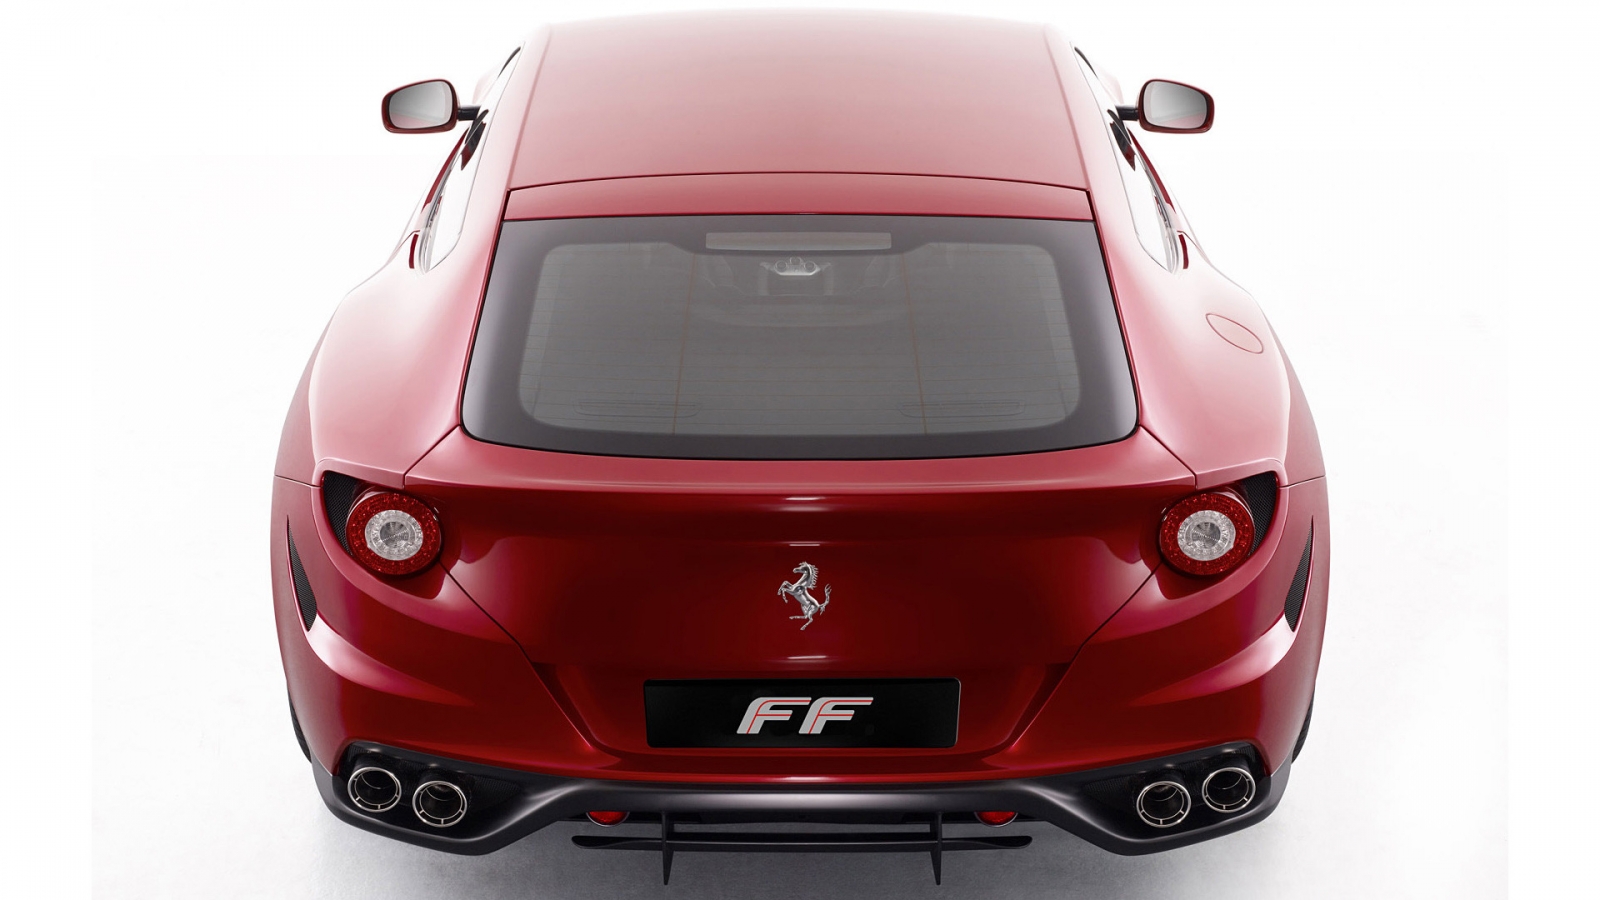 Ferrari FF Rear for 1600 x 900 HDTV resolution